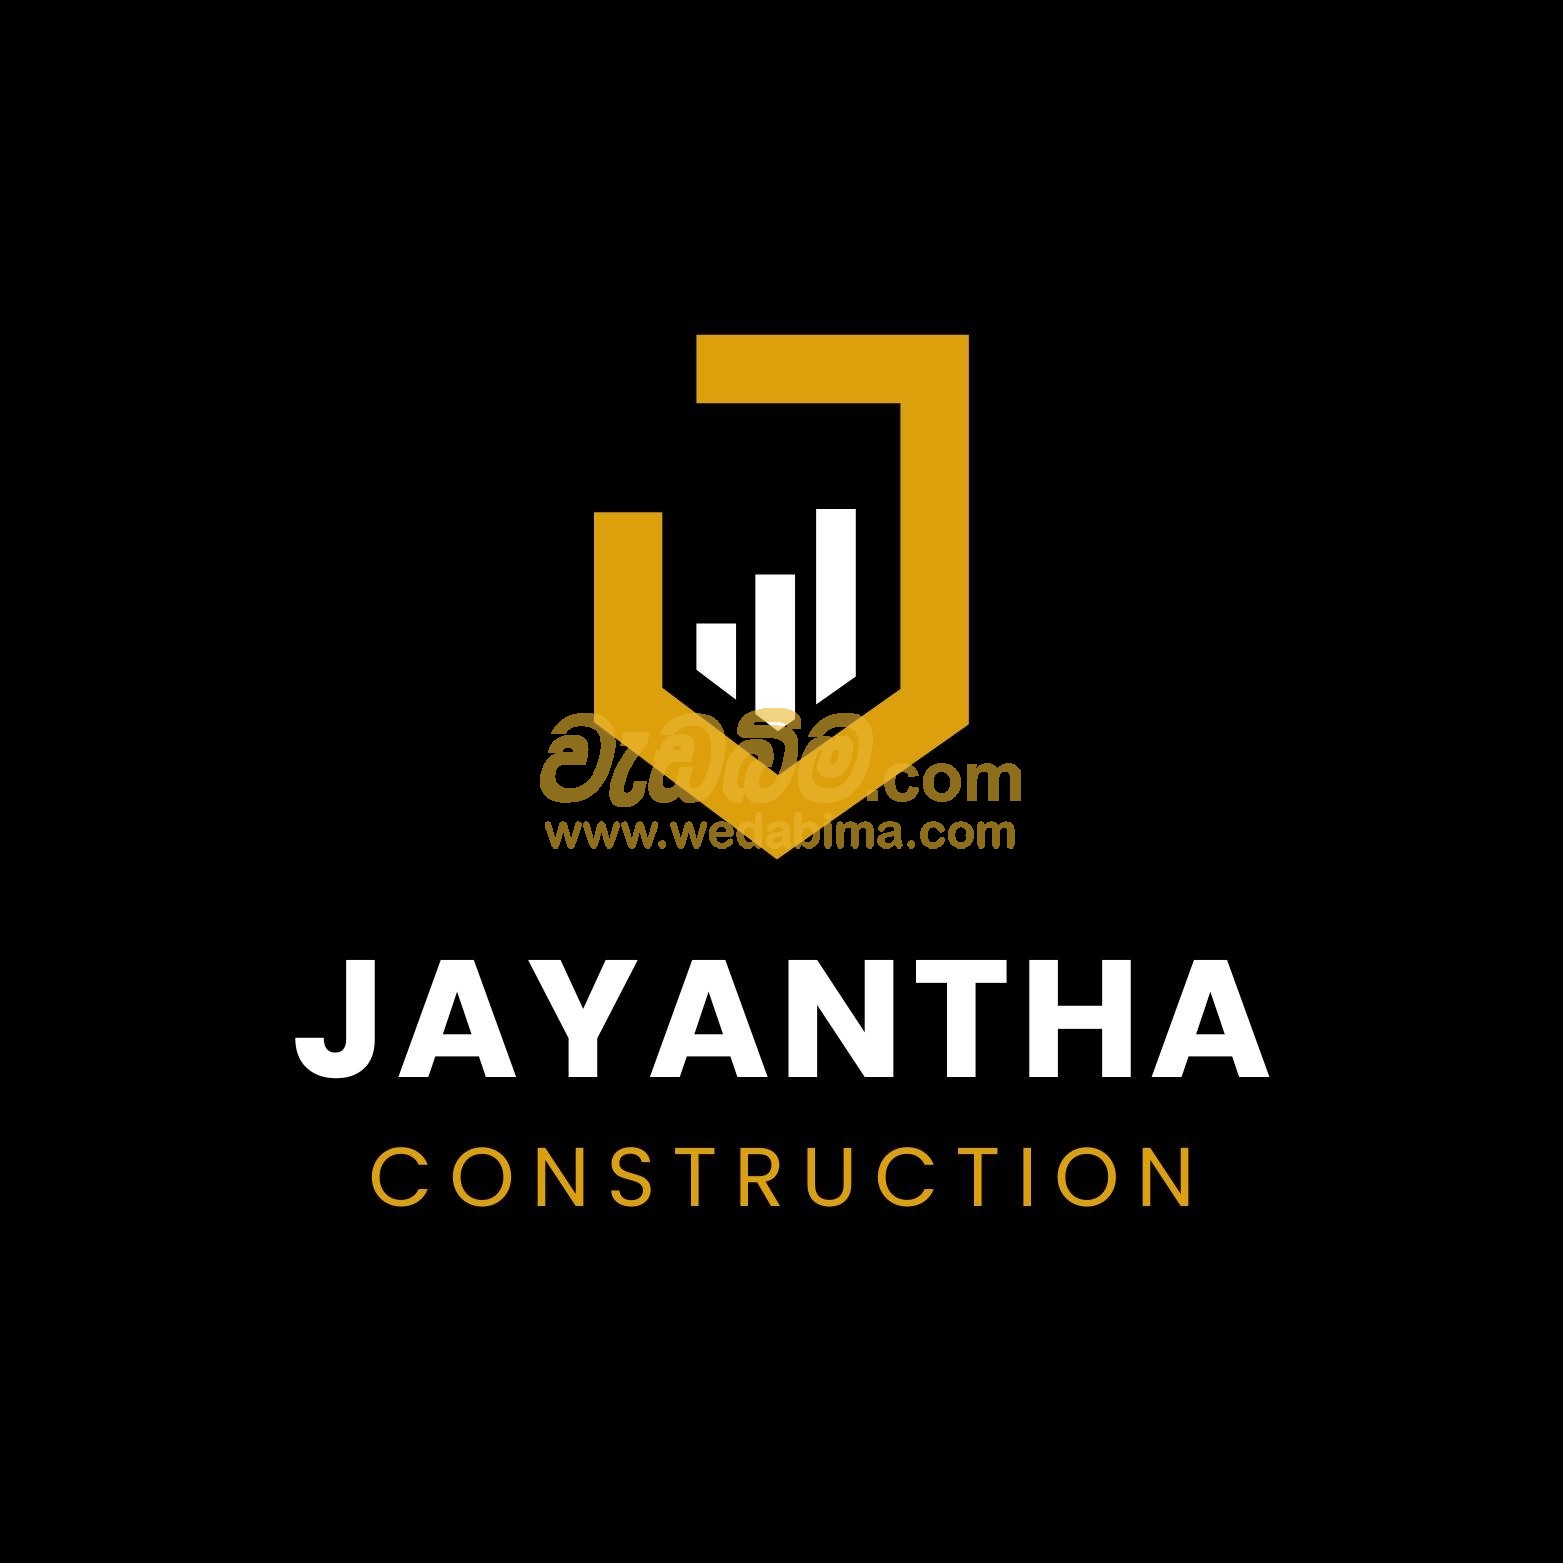 Jayantha Construction